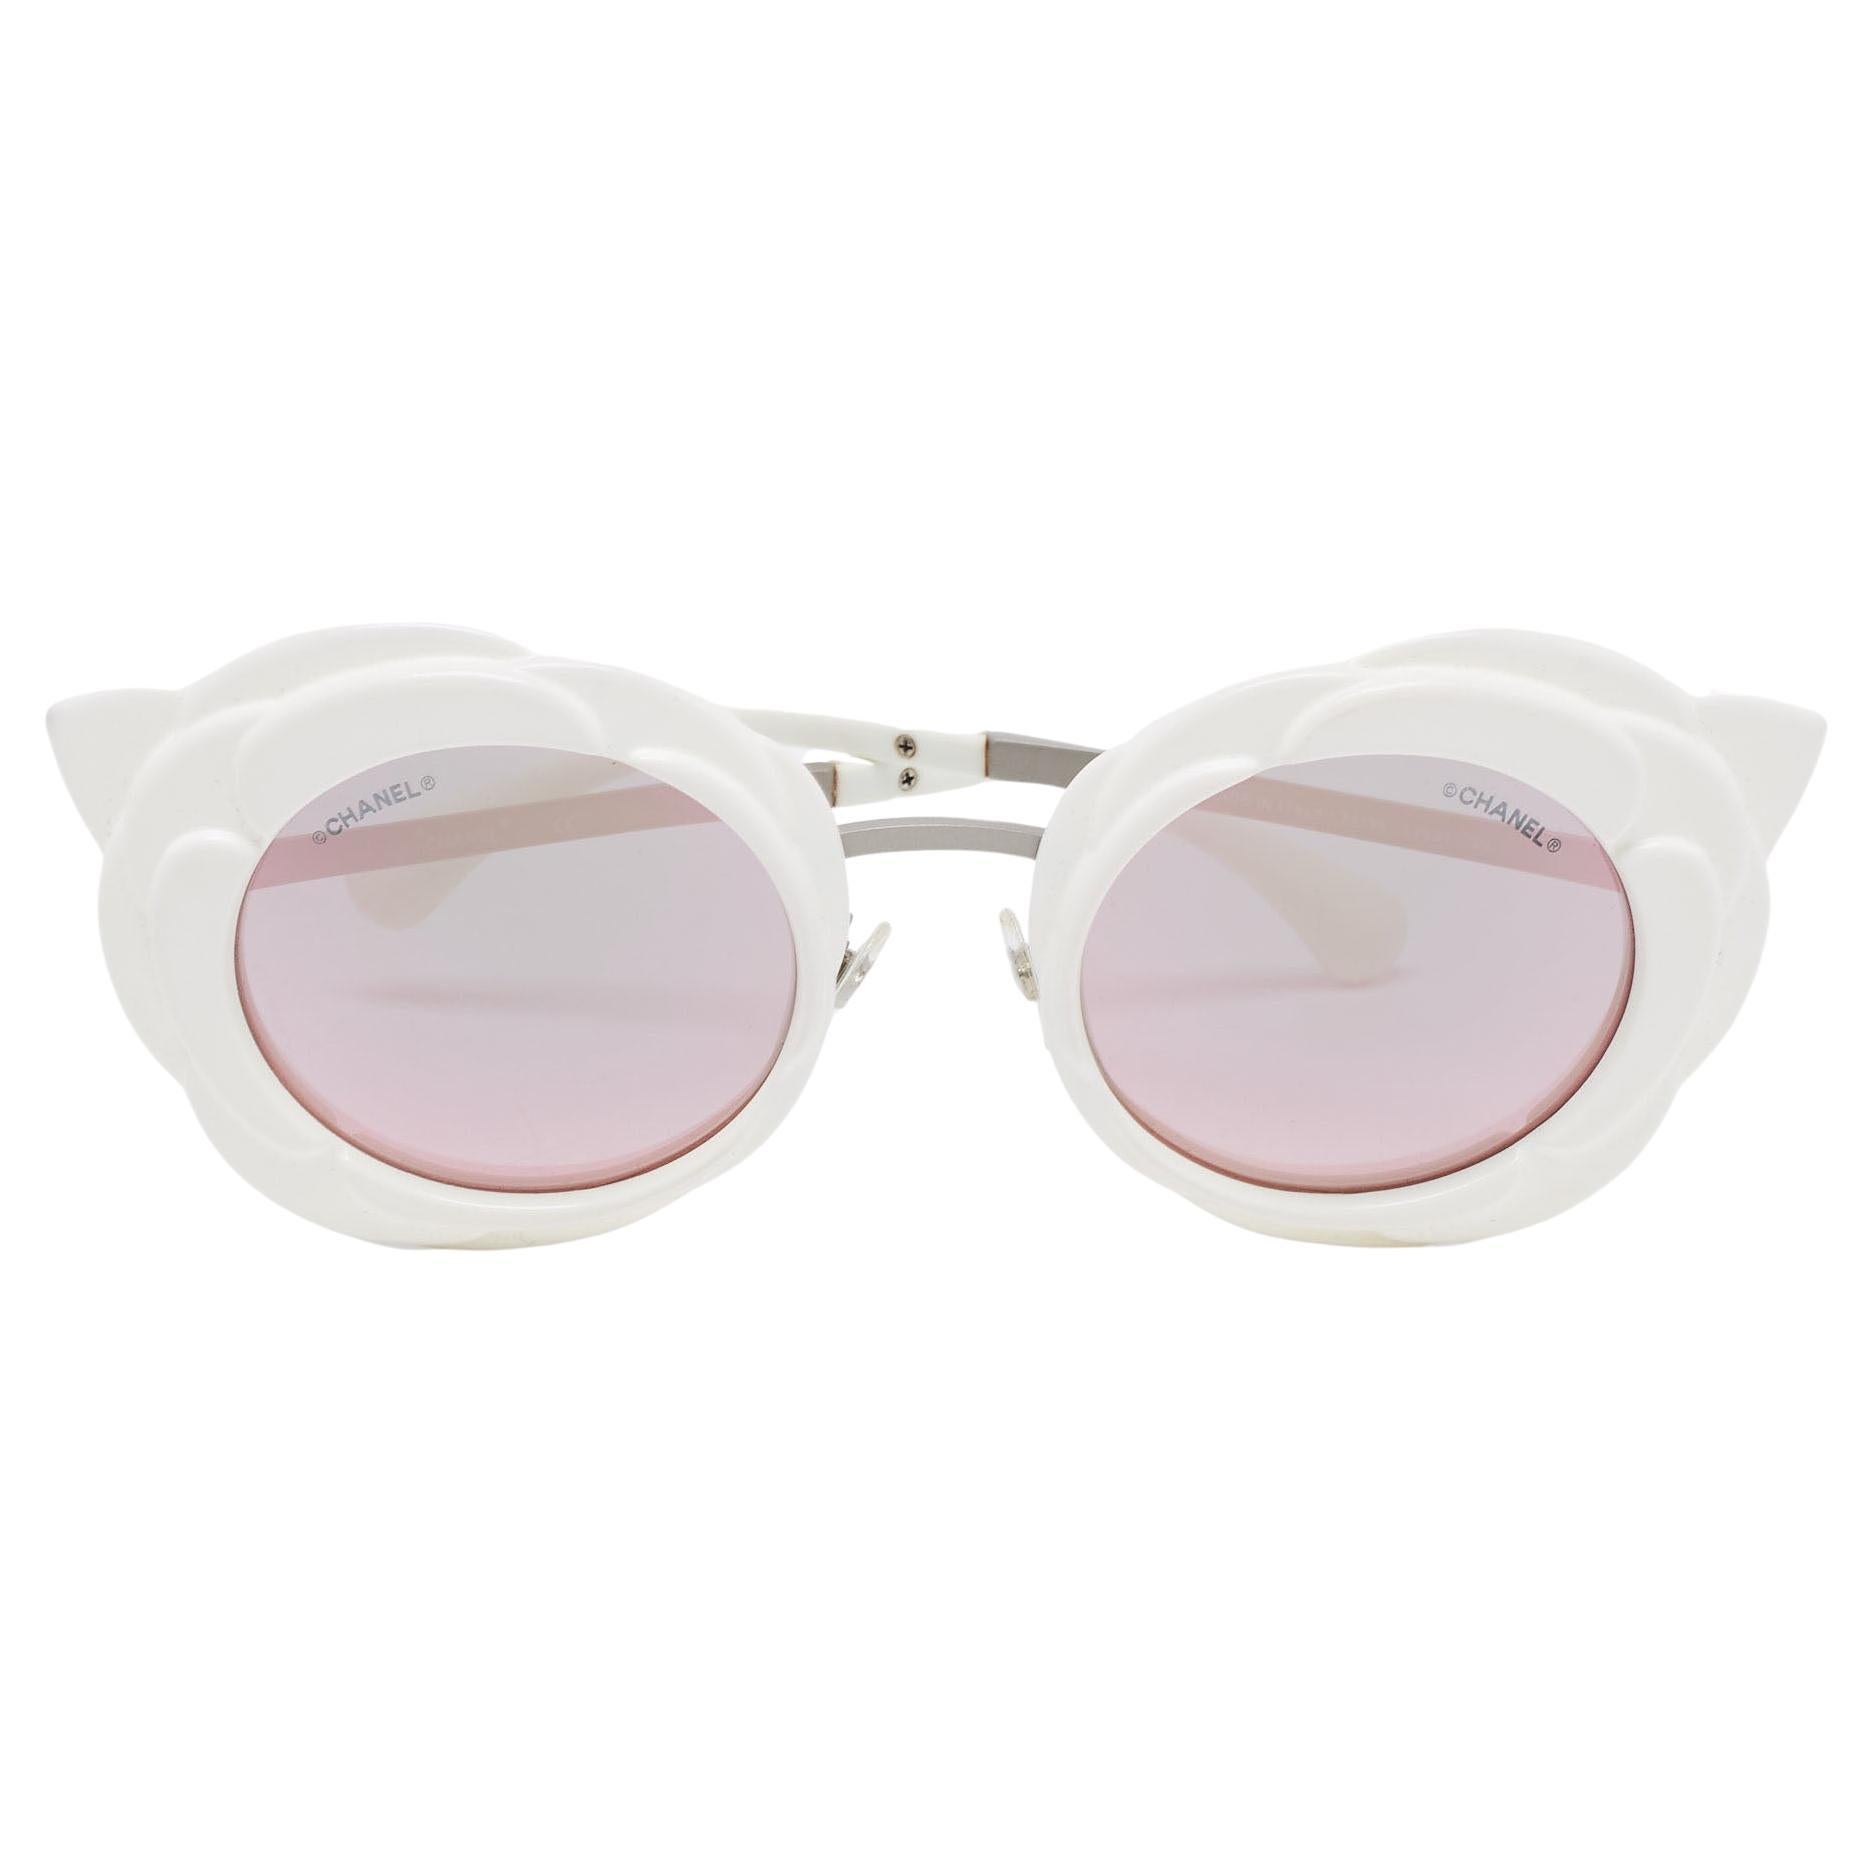 Chanel White/Pink Mirrored 71198 Camellia Round Sunglasses